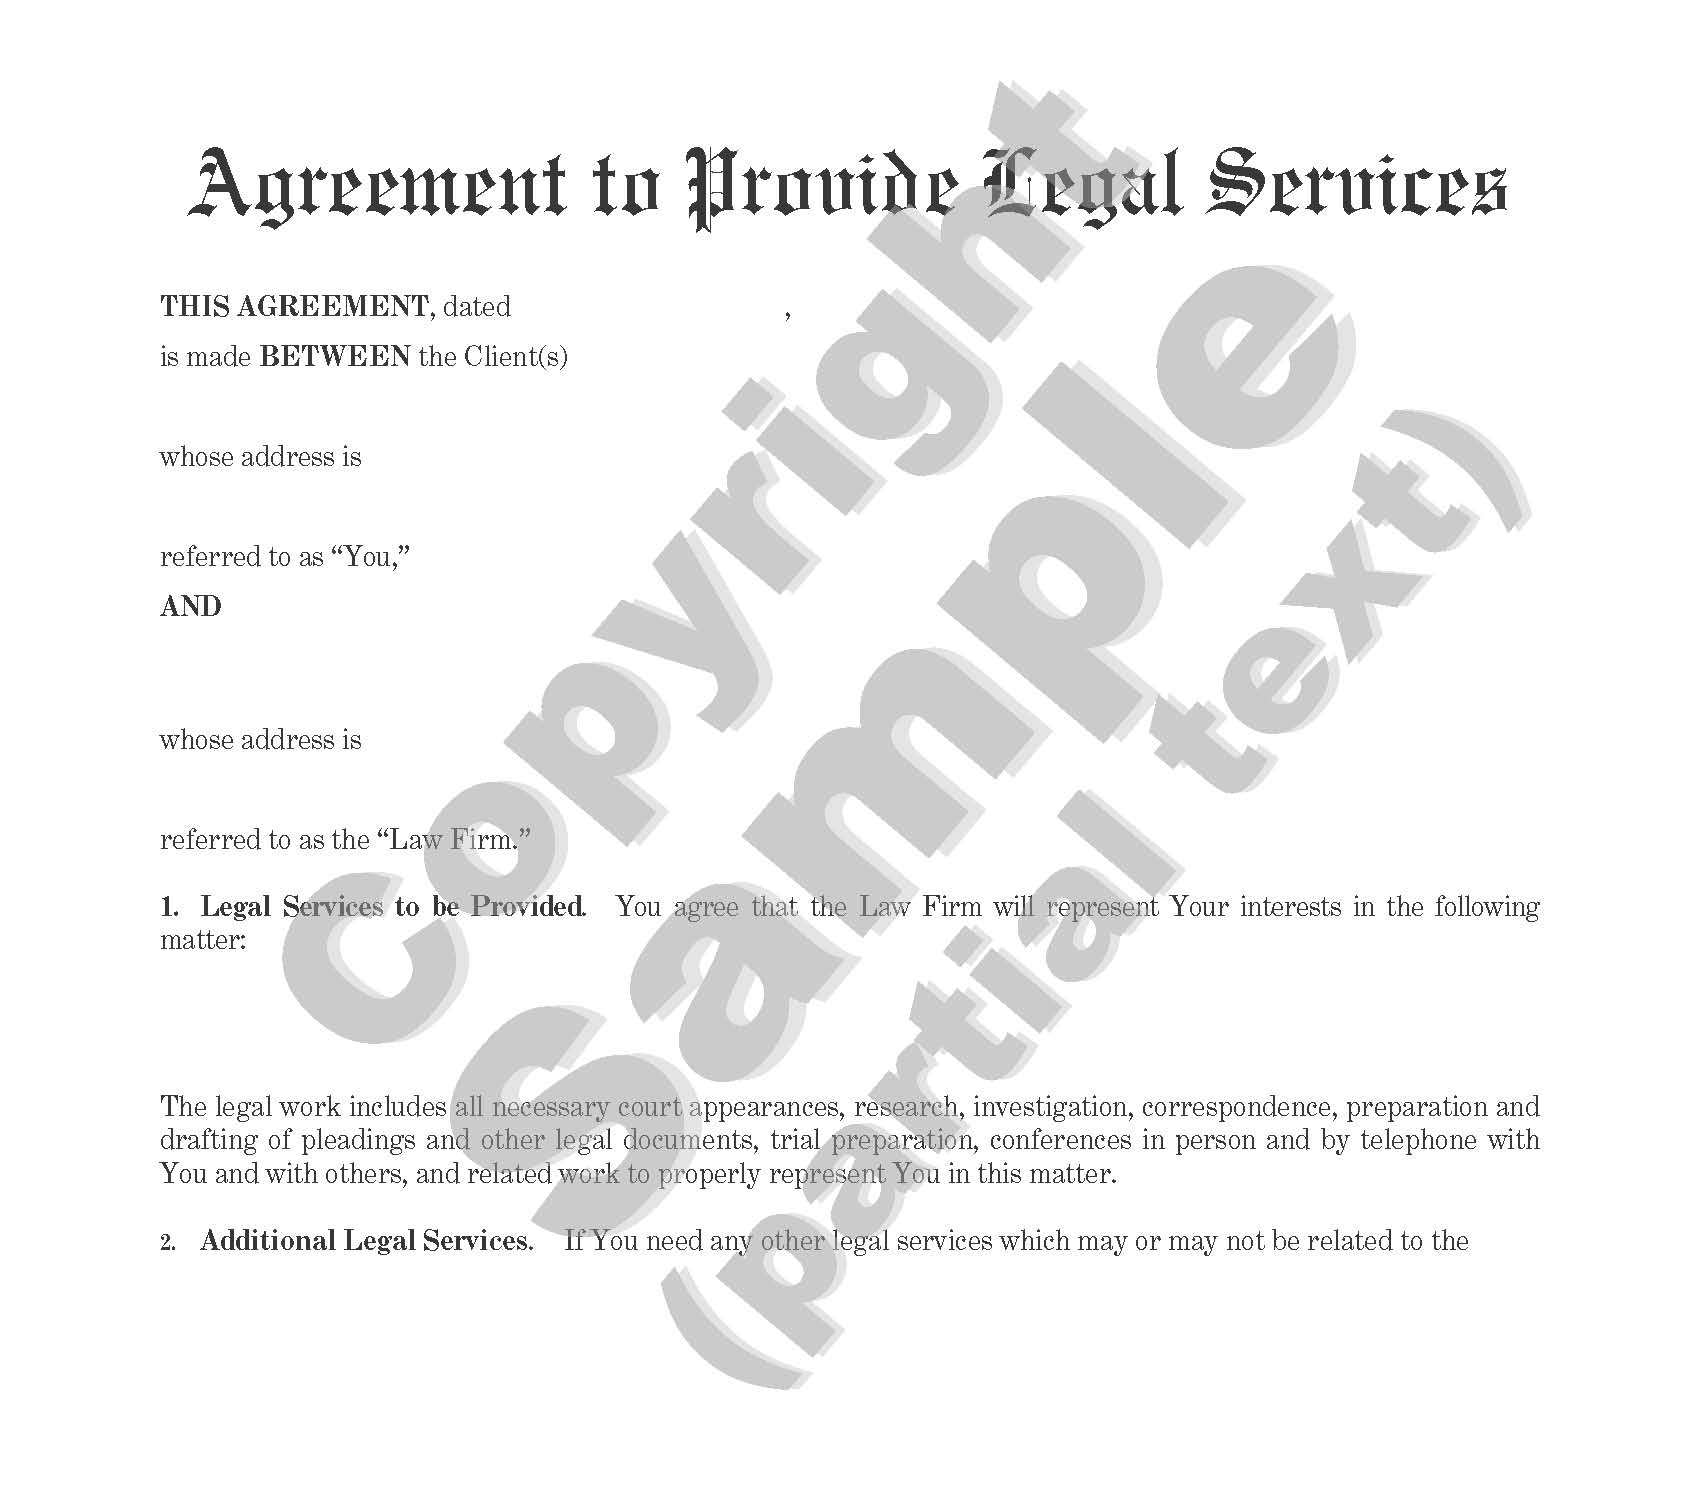 Legal Fee Agreement - General - Plain Language